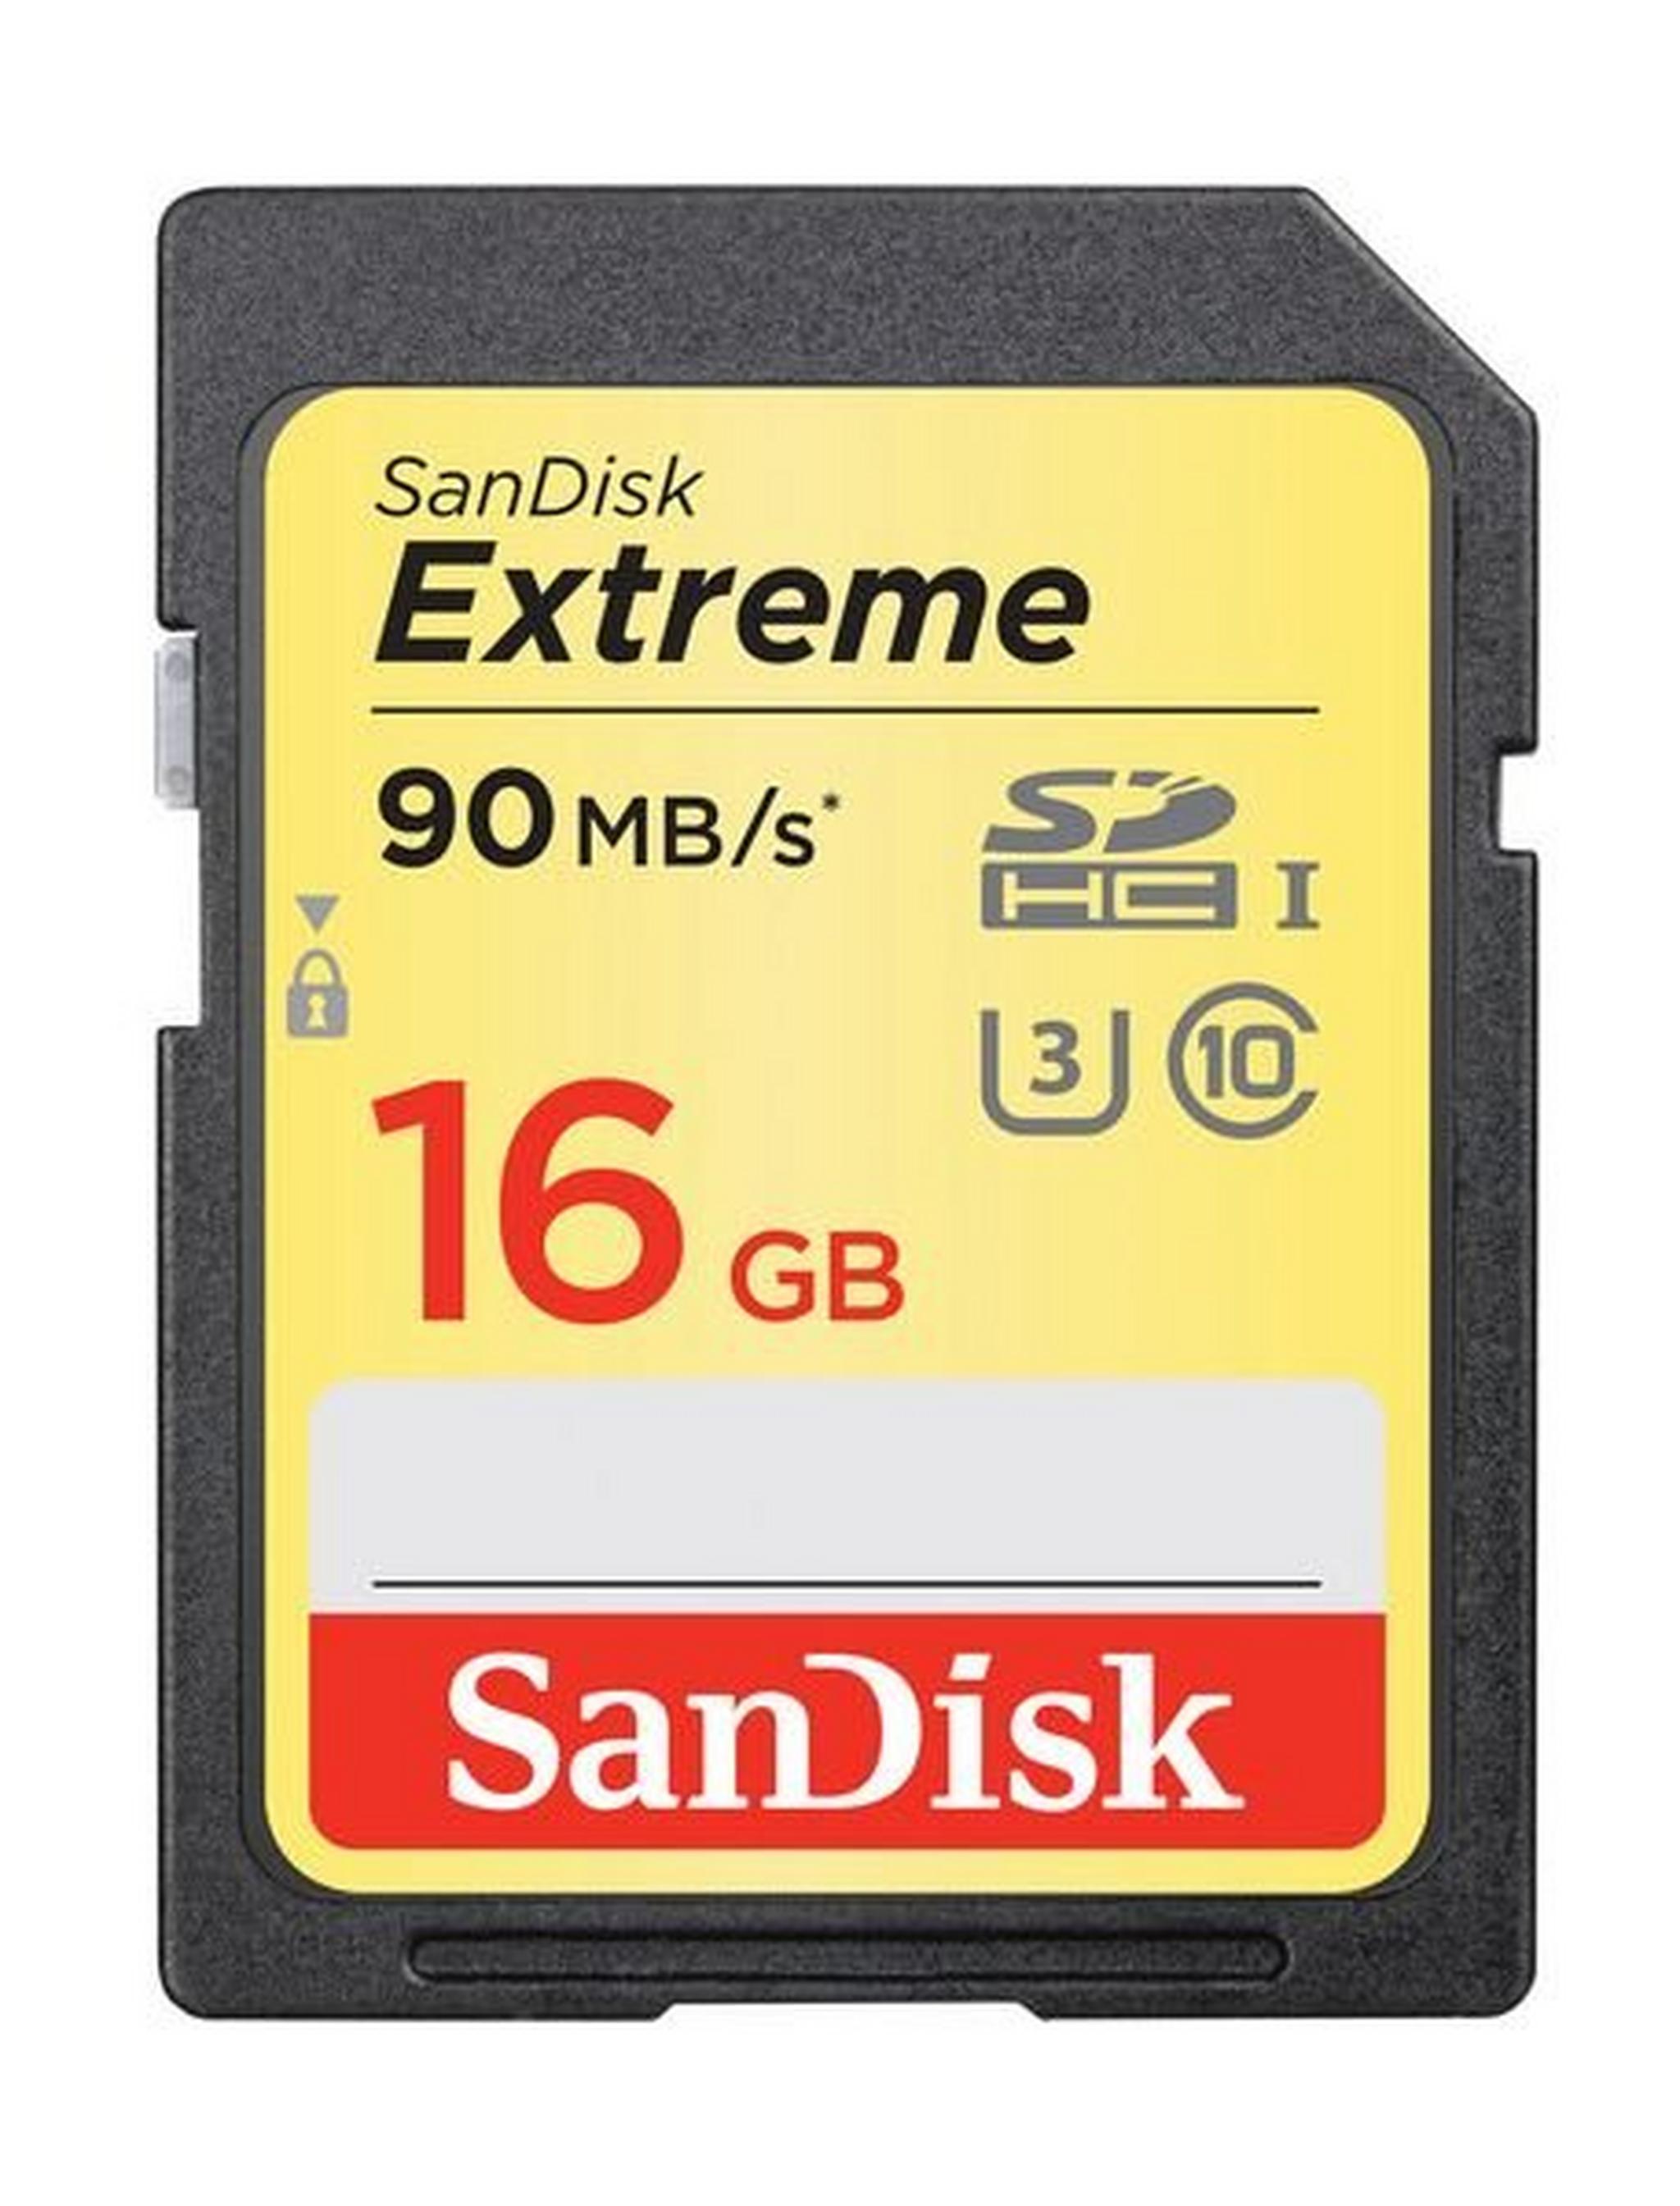 SanDisk Extreme 16Gb 90MB/s UHS-I U3 SDHC Class 10 Memory Card